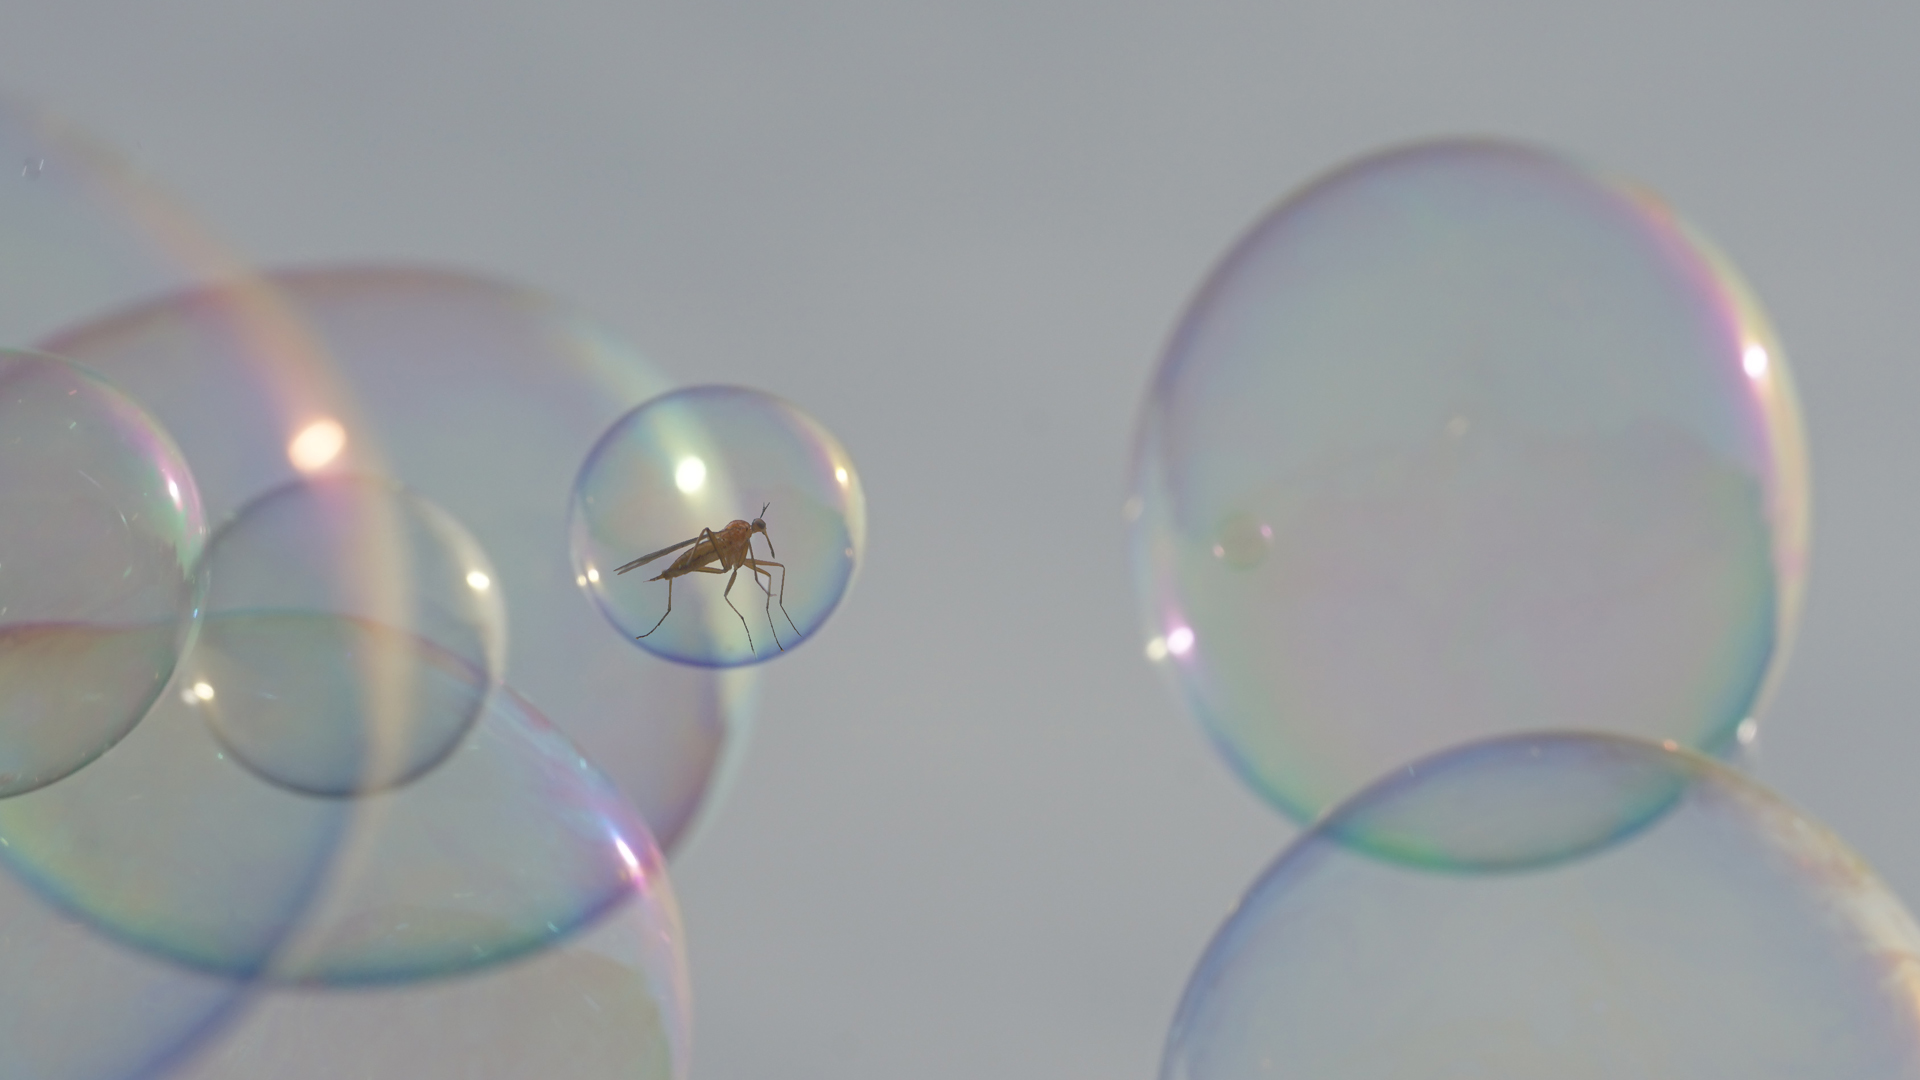 Fotostrecke Illusionsfotografie 05: For mosquitoes a new era of aviation has begun